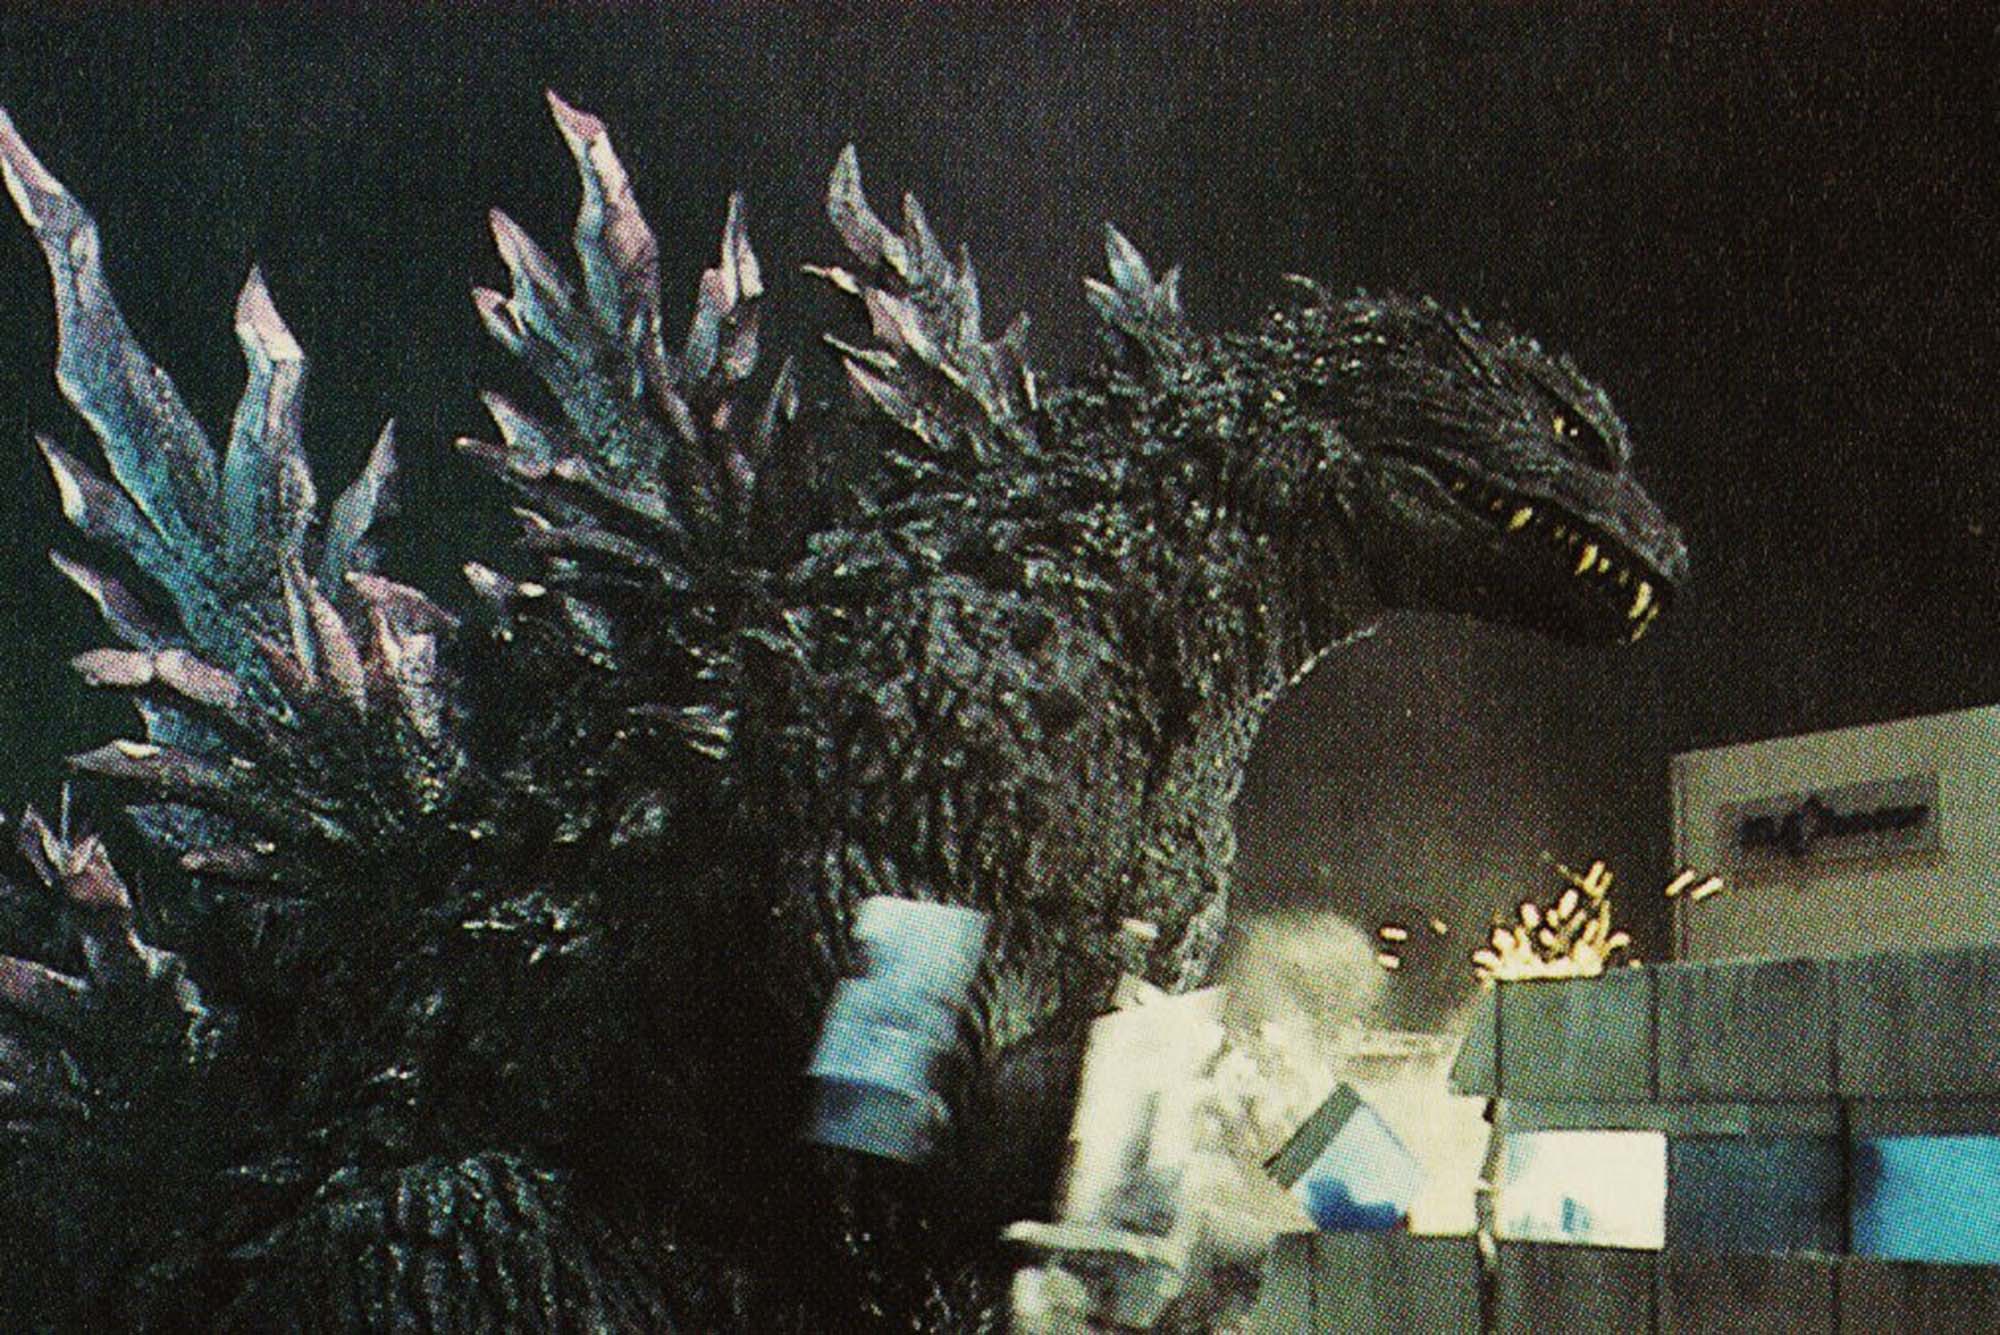 Photo: A movie still from "Godzilla 2000" featuring Godzilla causing destruction